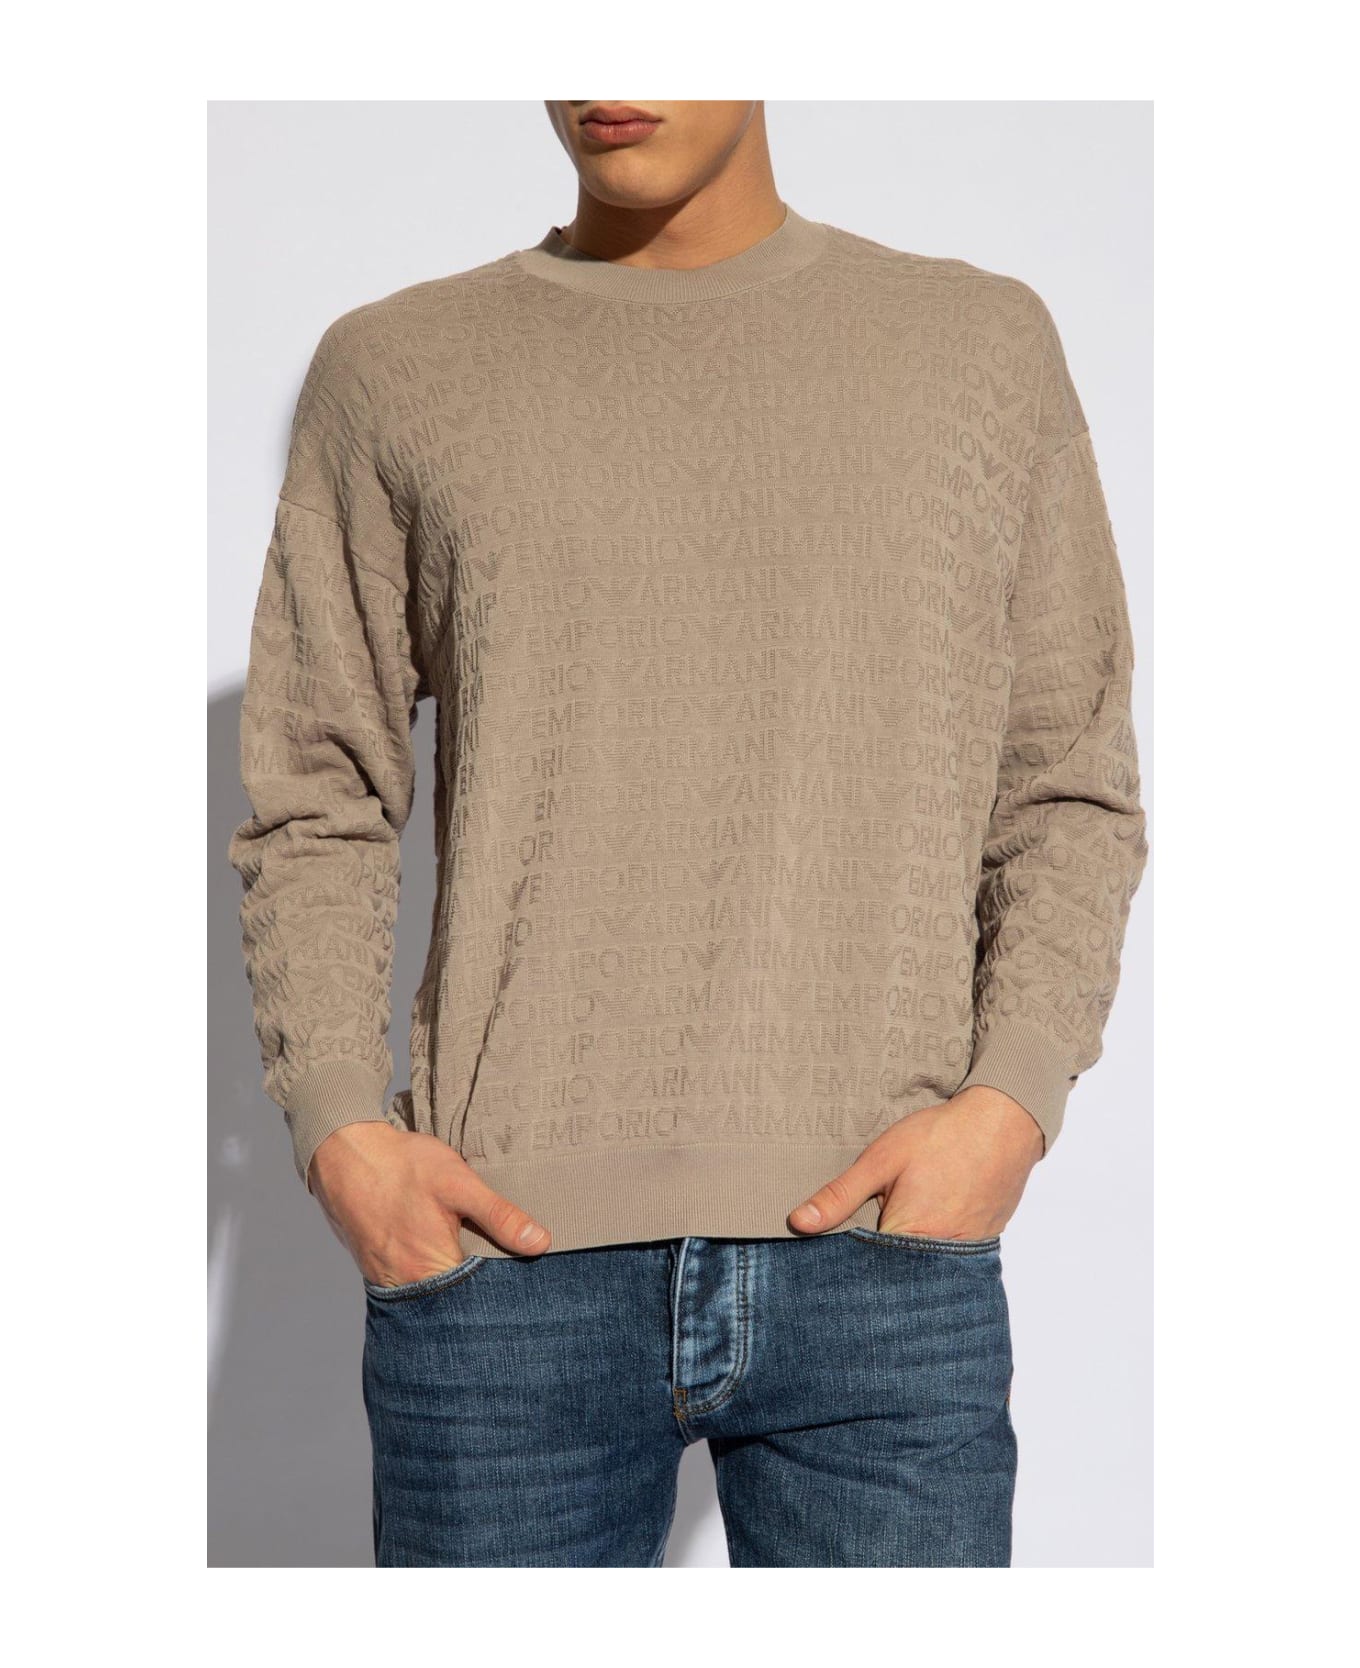 Emporio Armani Monogrammed Sweater